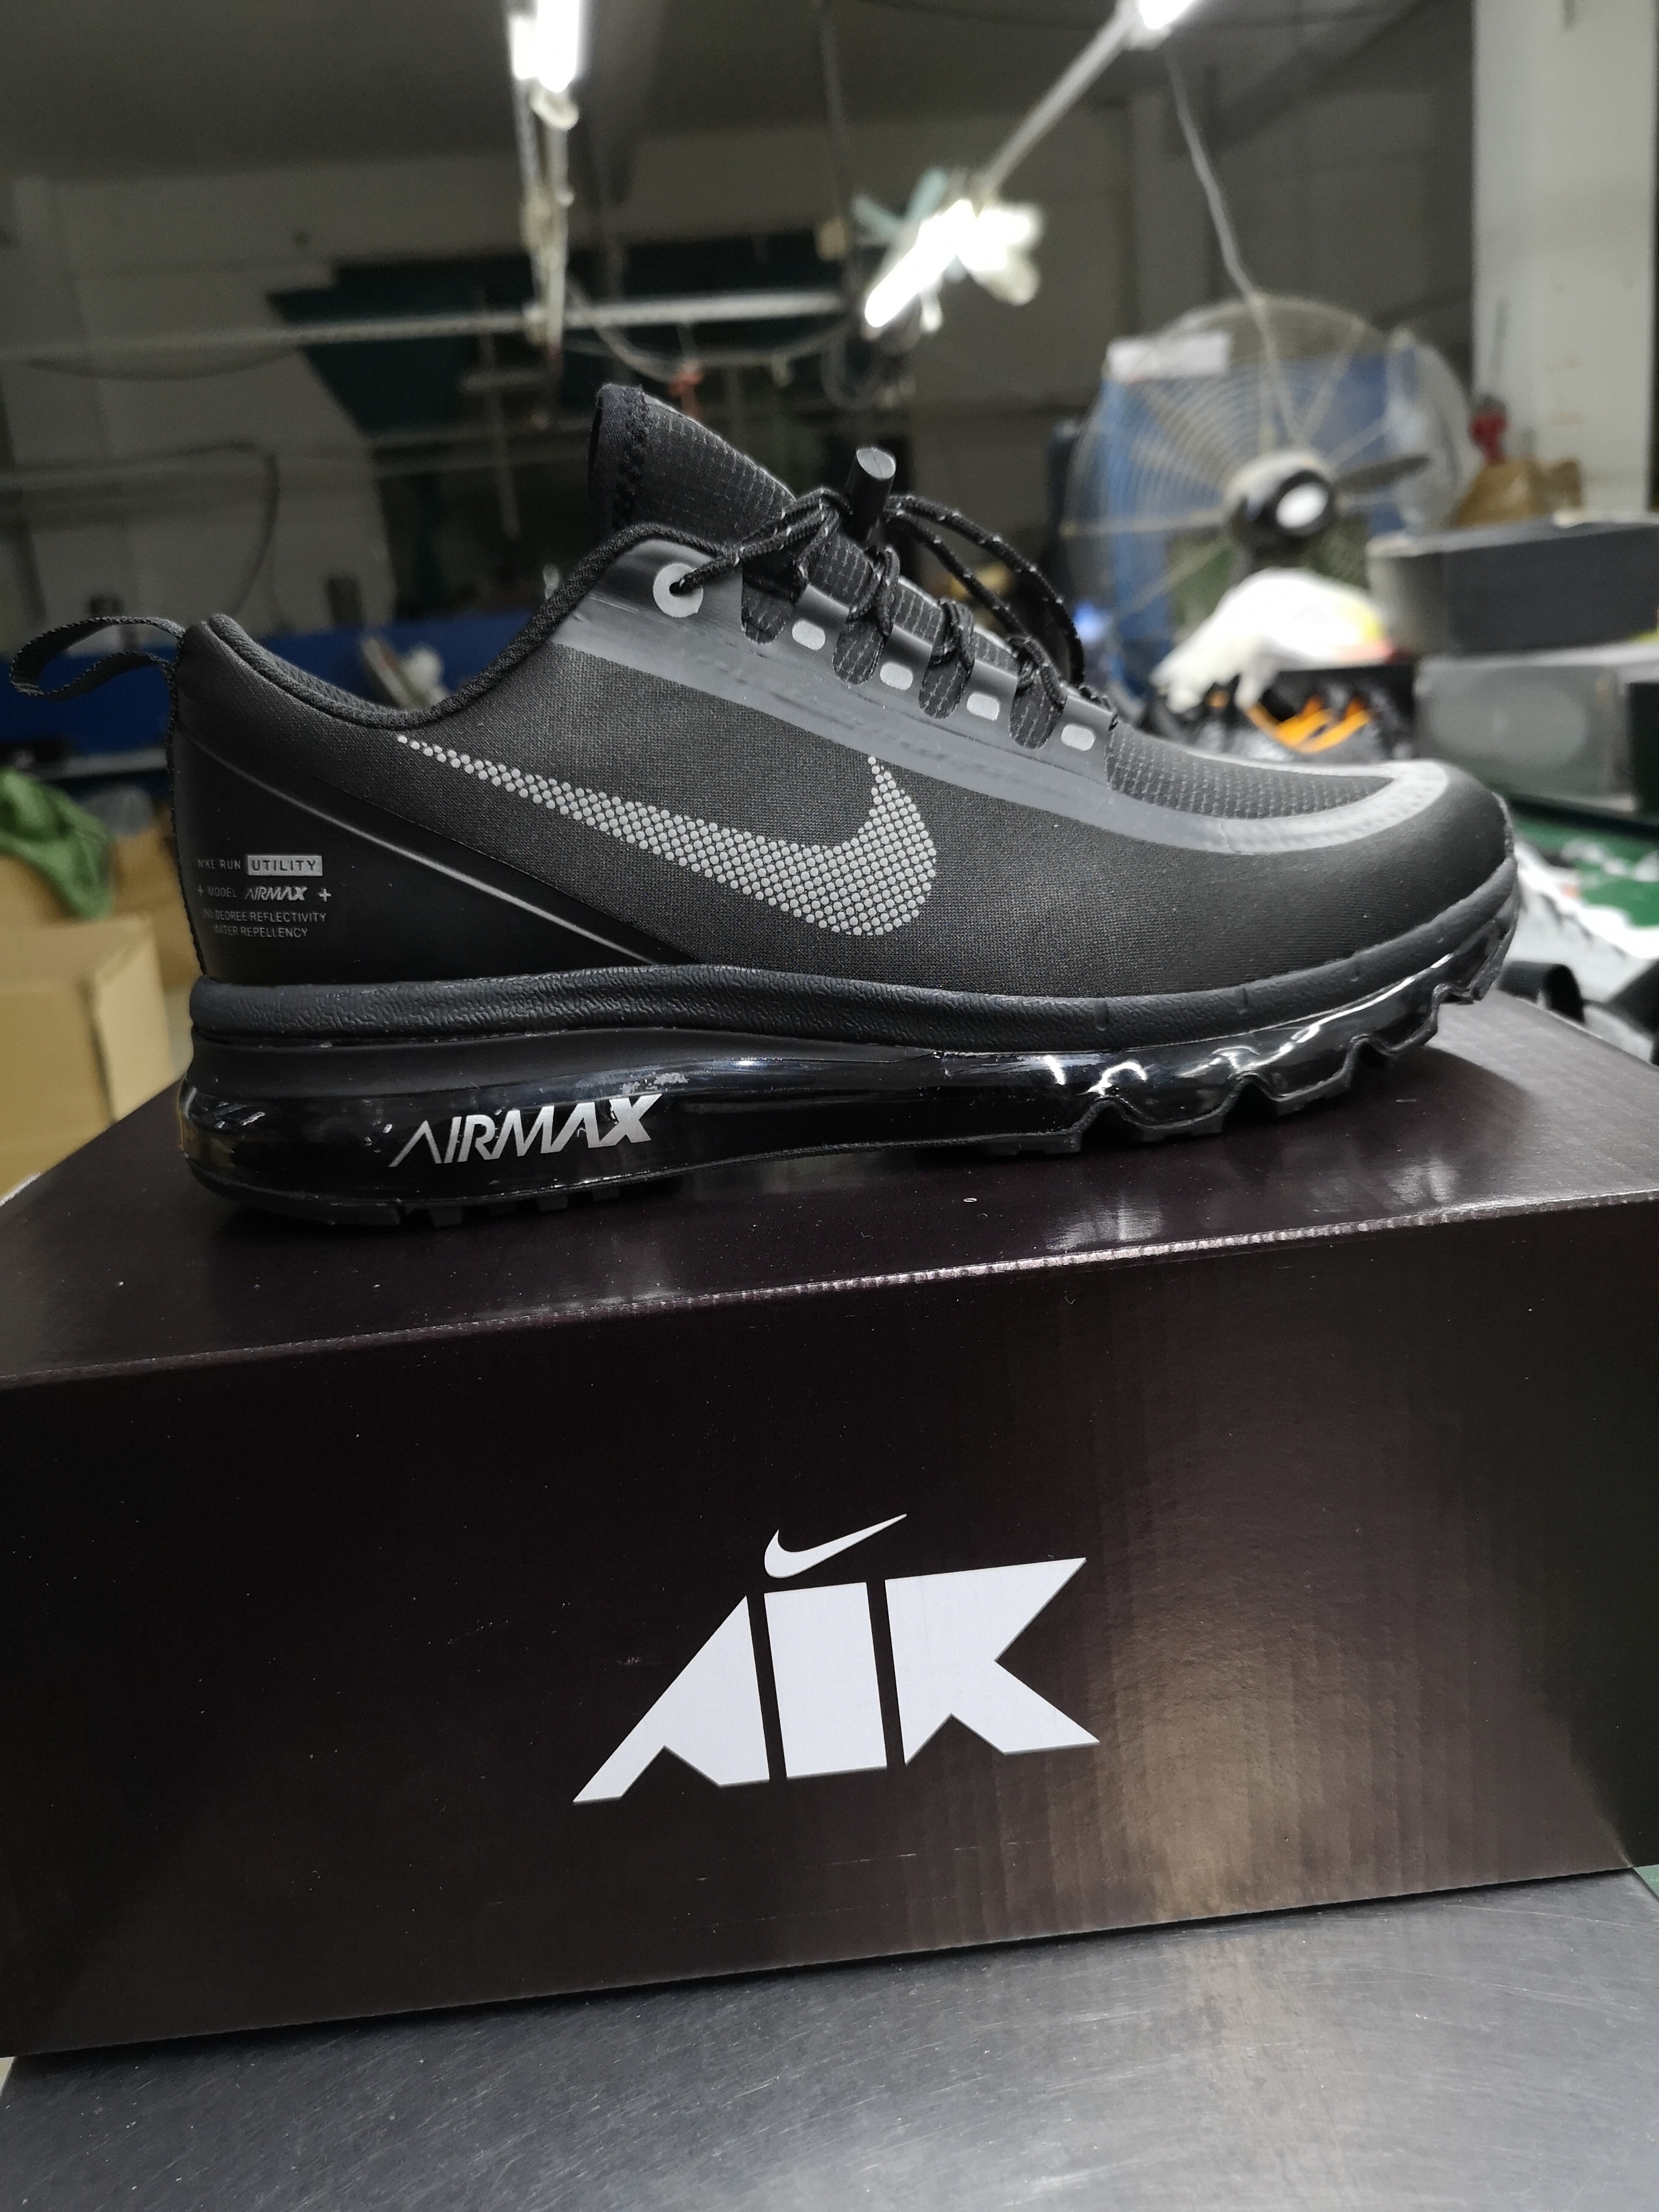 Nike Air Max 2017 Waterproof Carbon Black Shoes